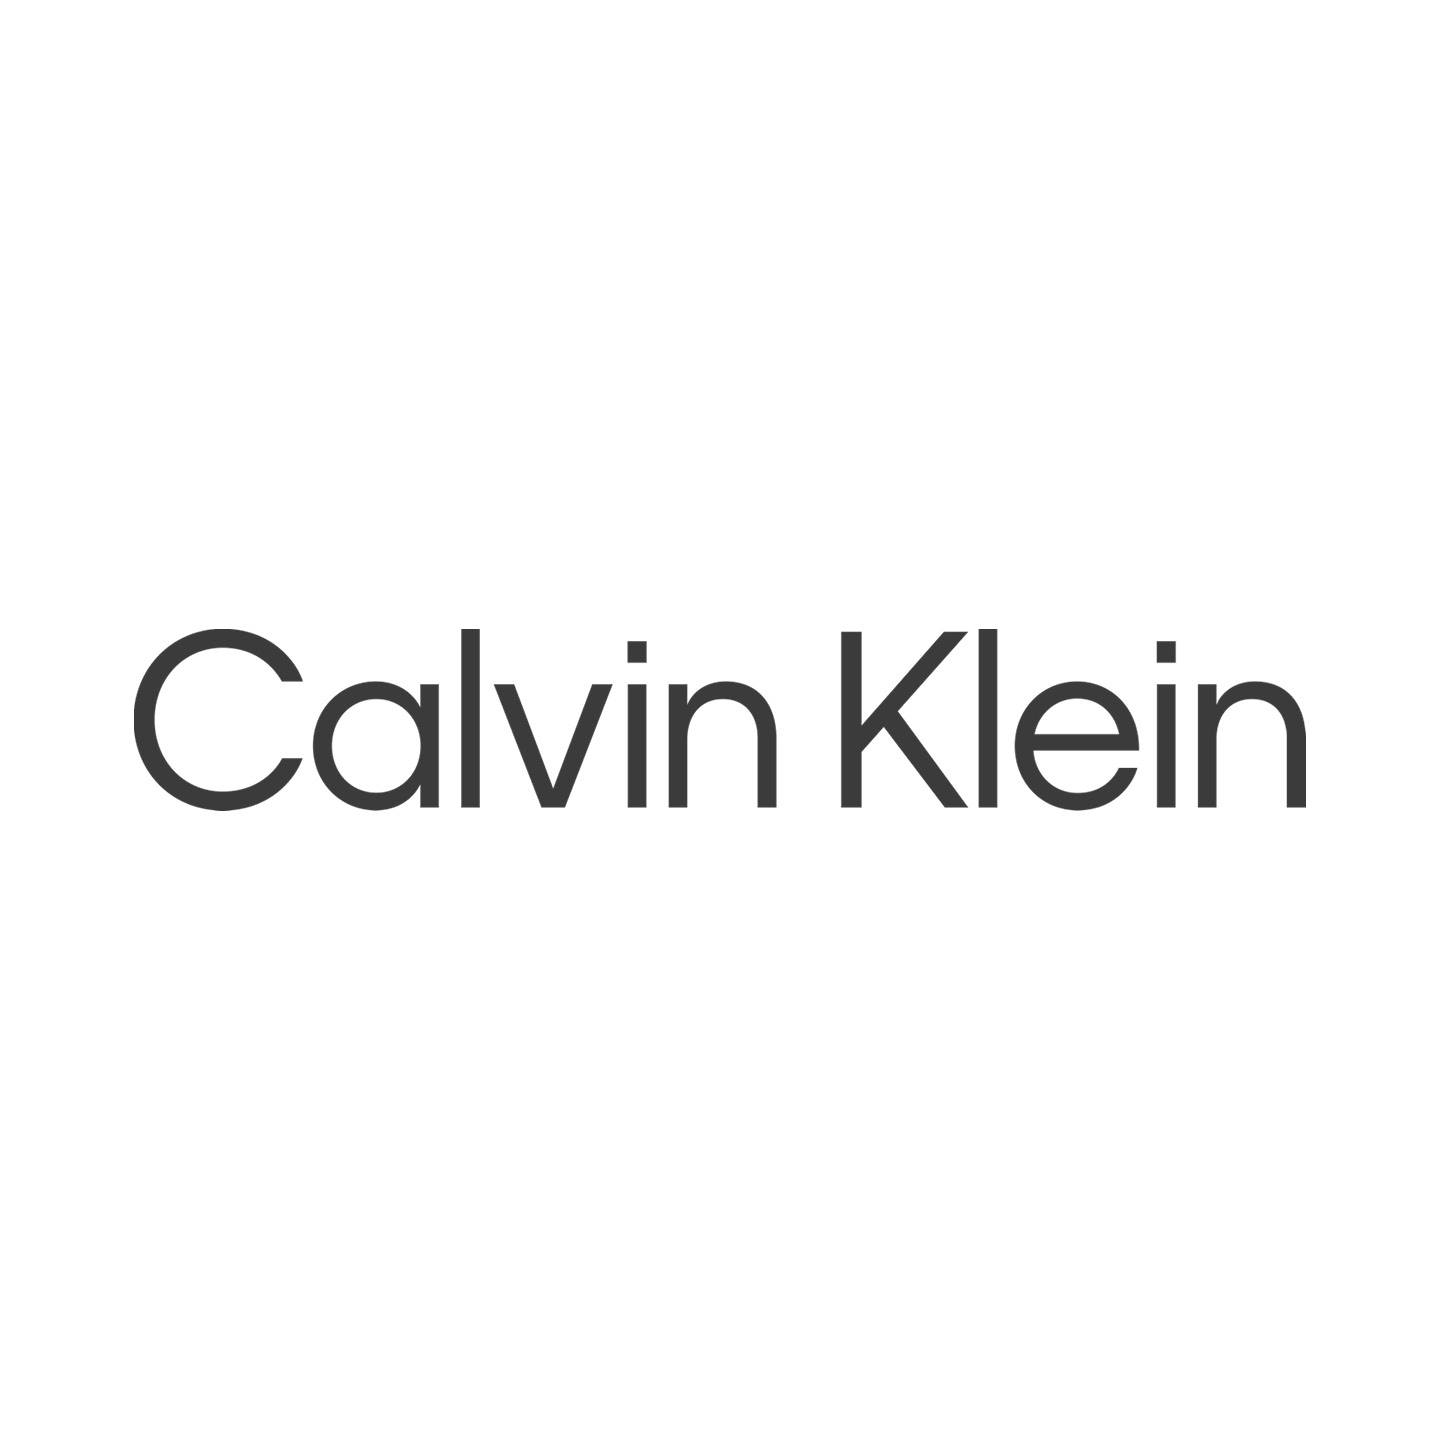 Calvin Klein on blendnewyork